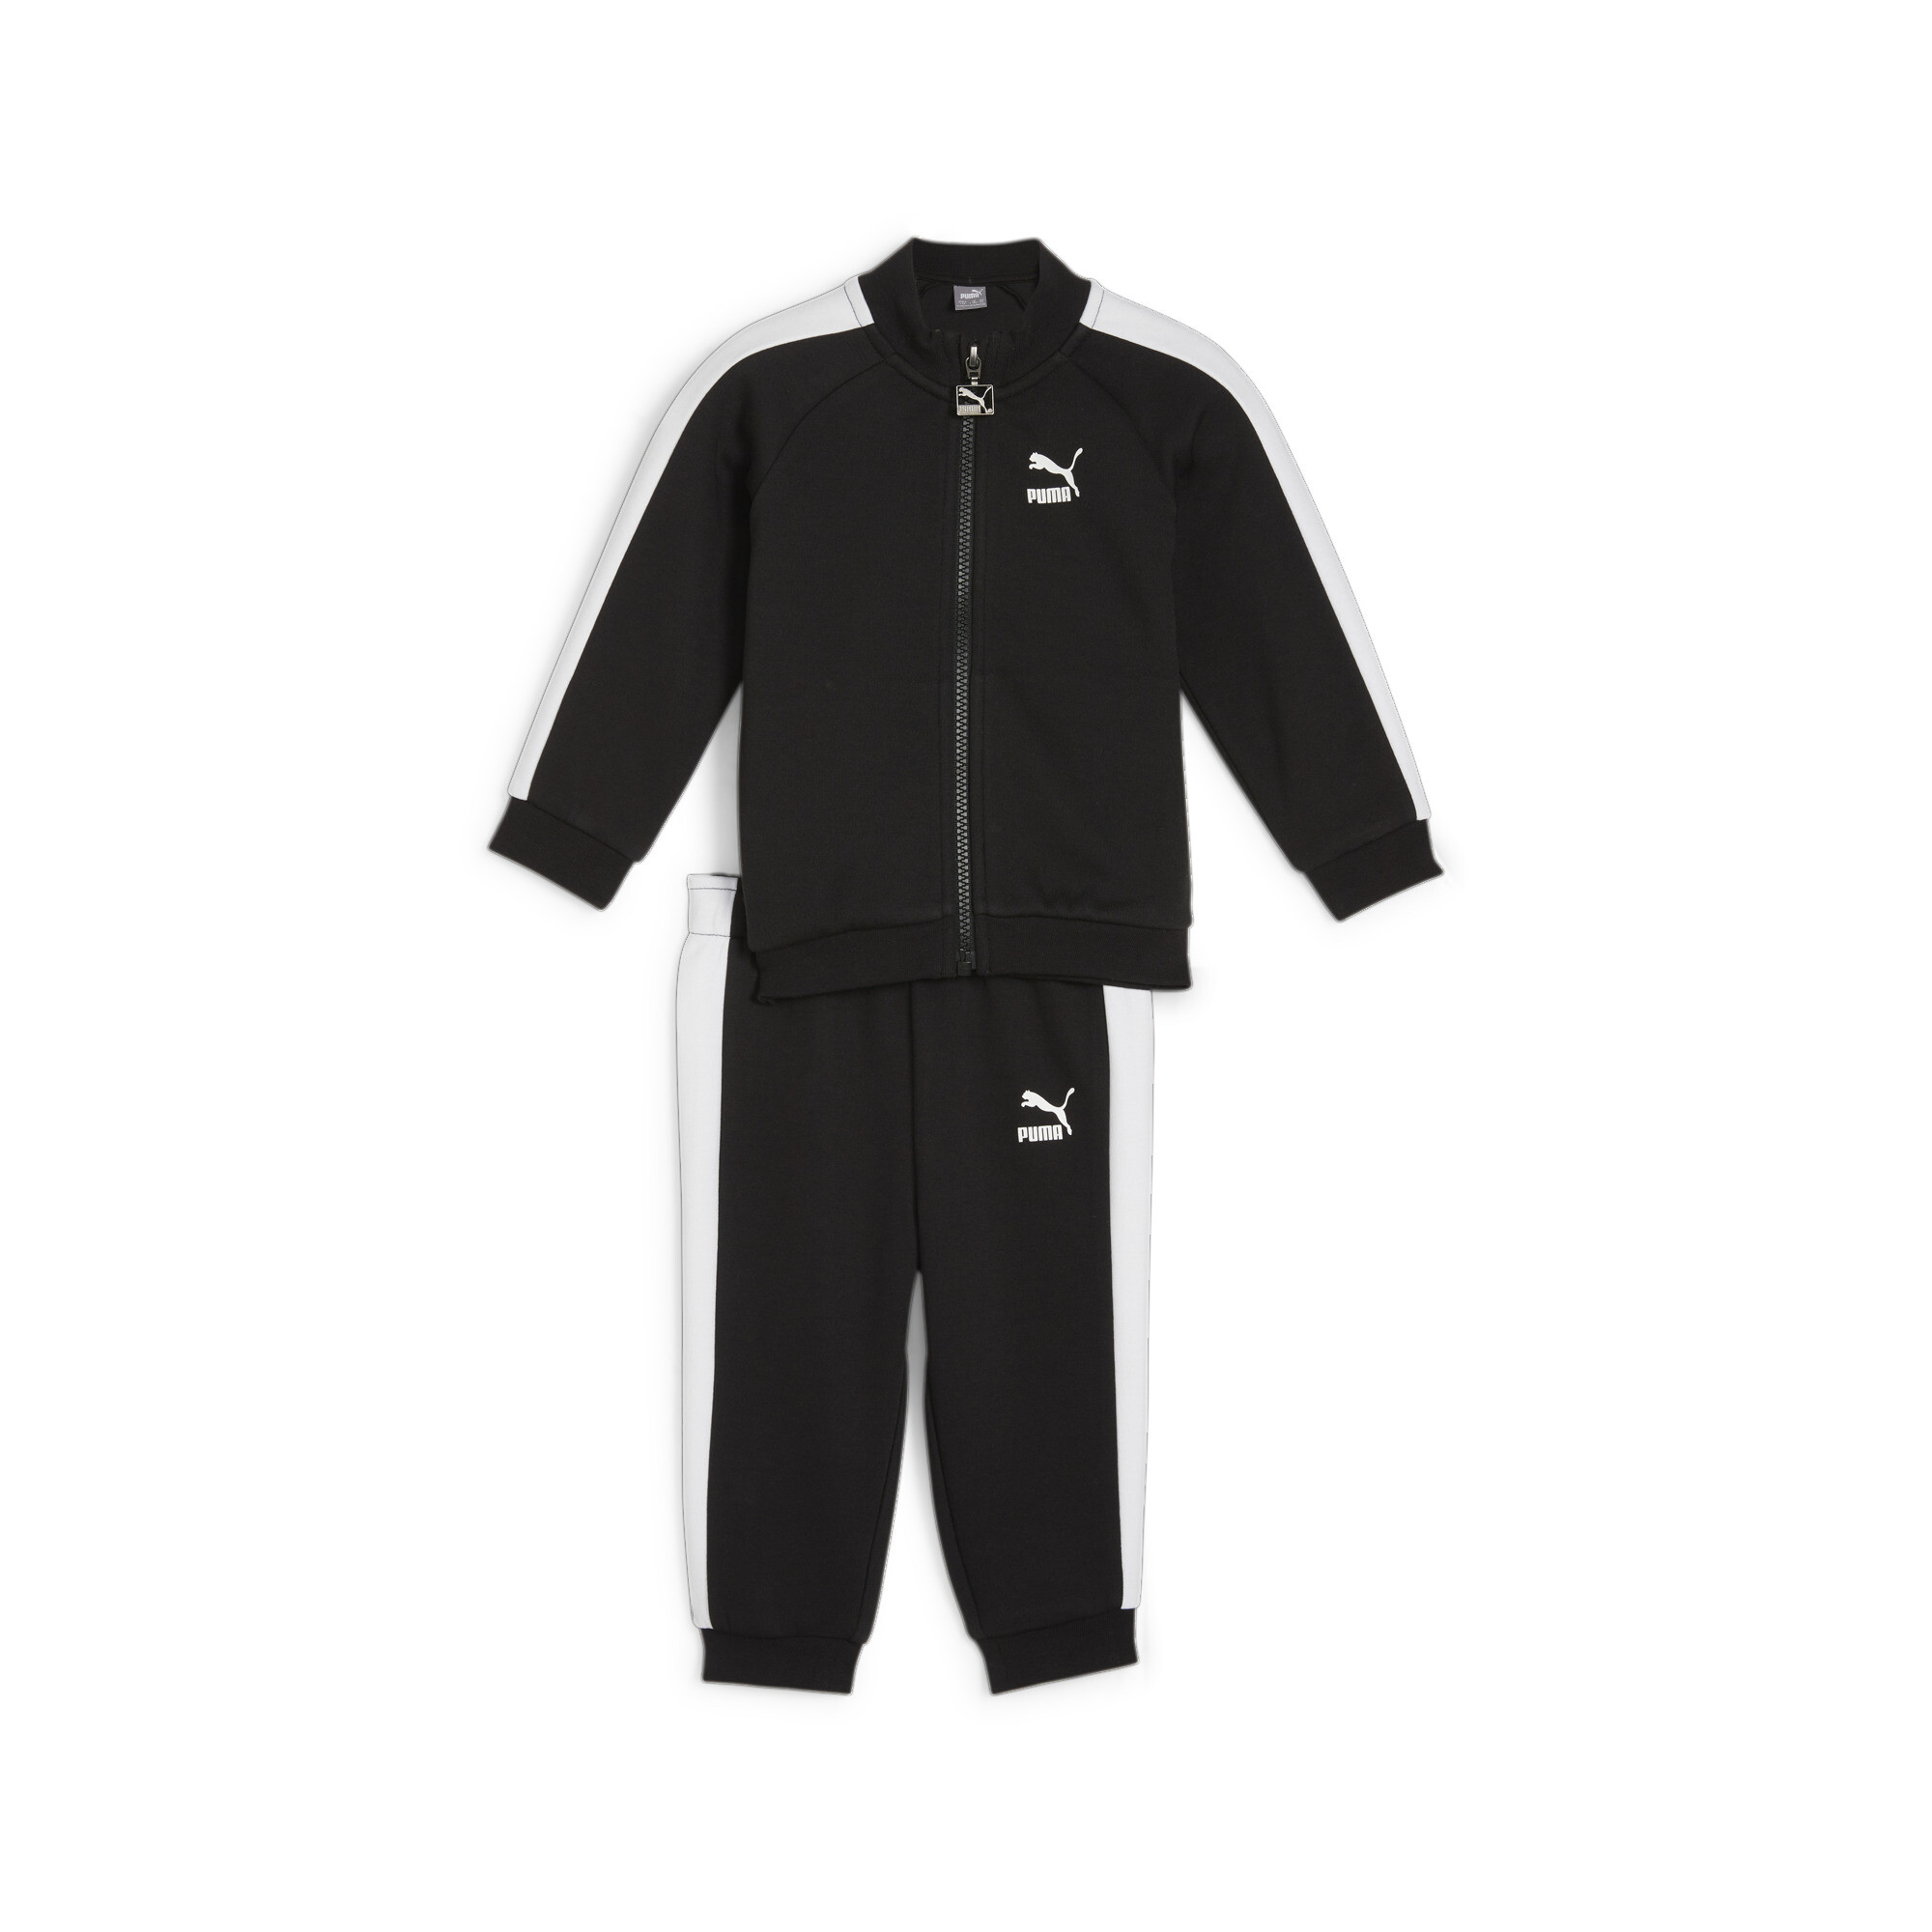 Puma MINICATS T7 ICONIC Baby Tracksuit Set, Black, Size 2-3Y, Clothing